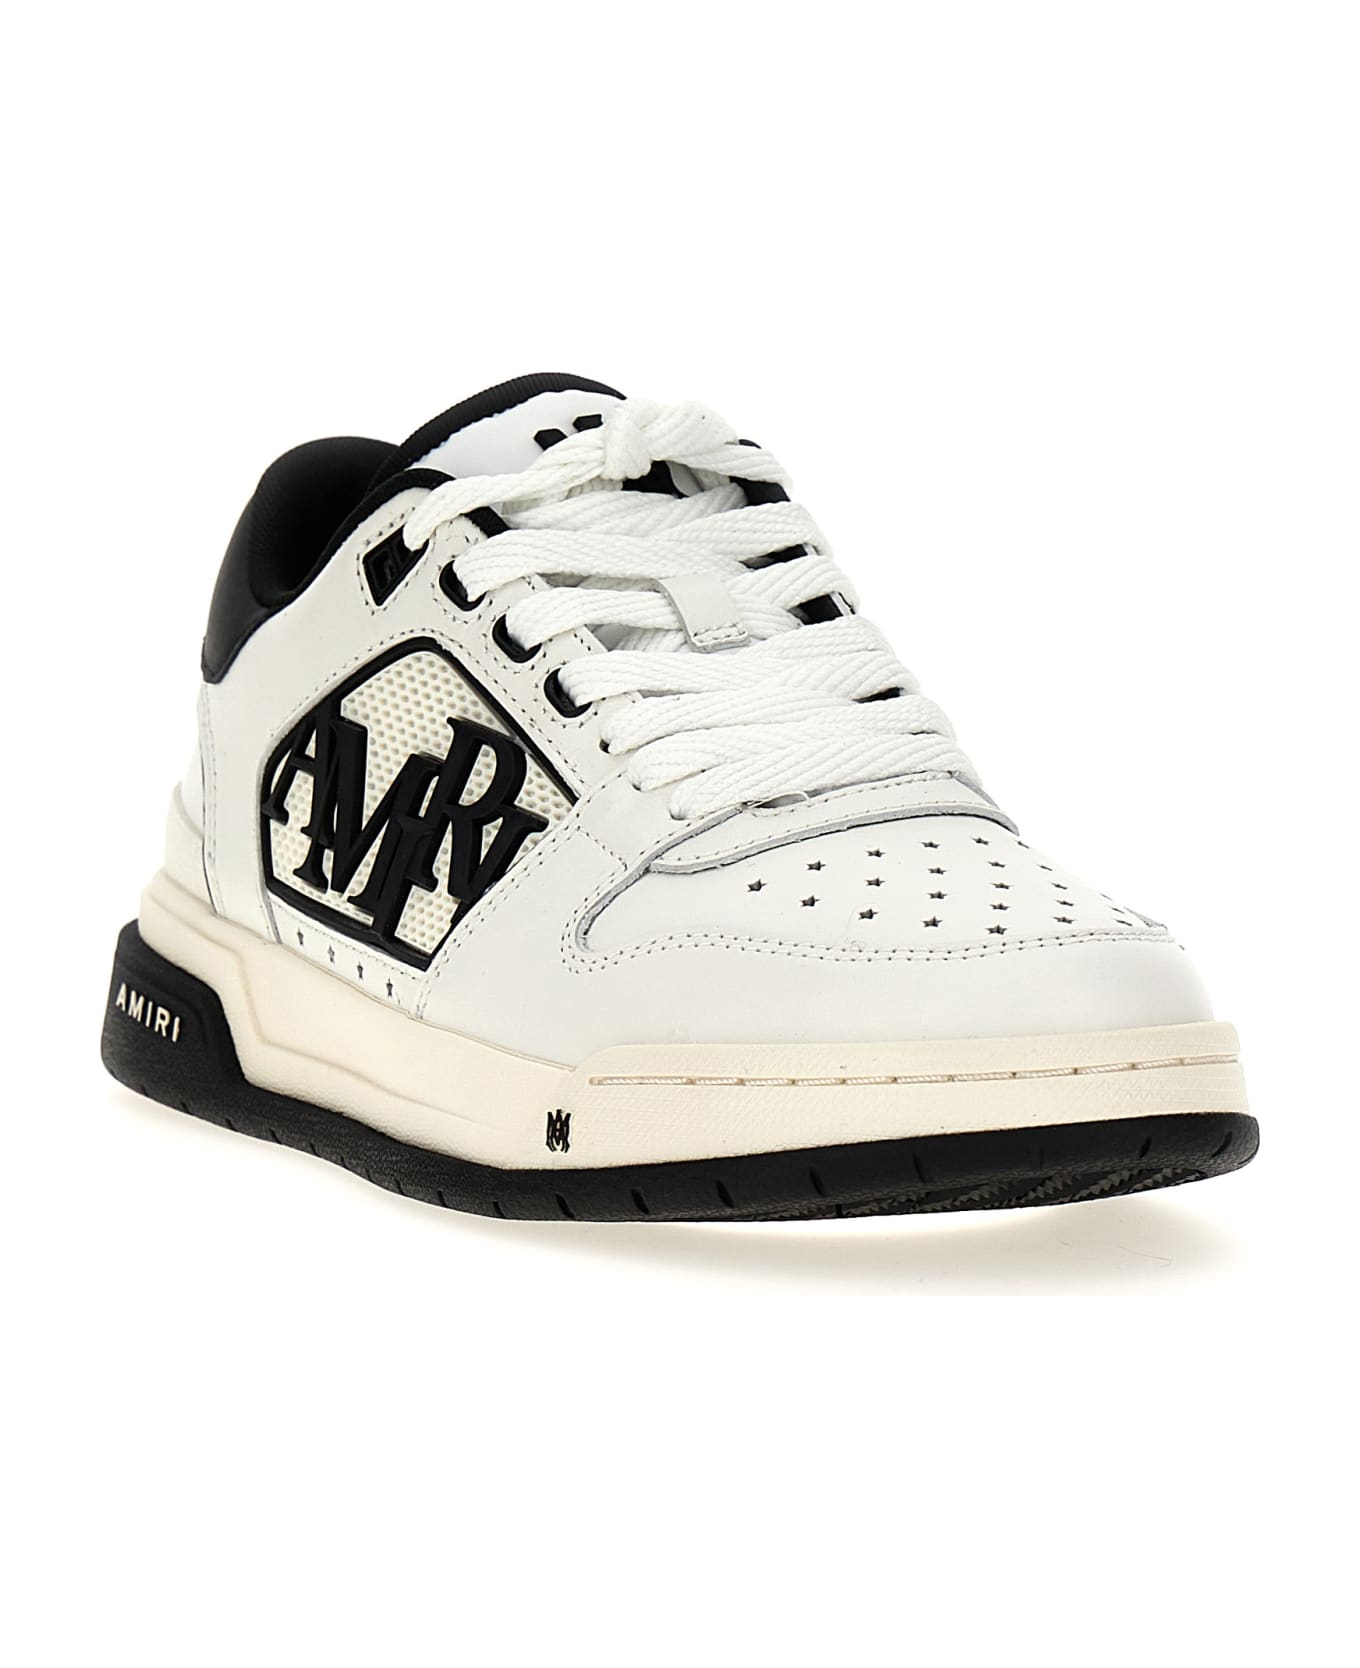 AMIRI 'classic Low' Sneakers - White/Black